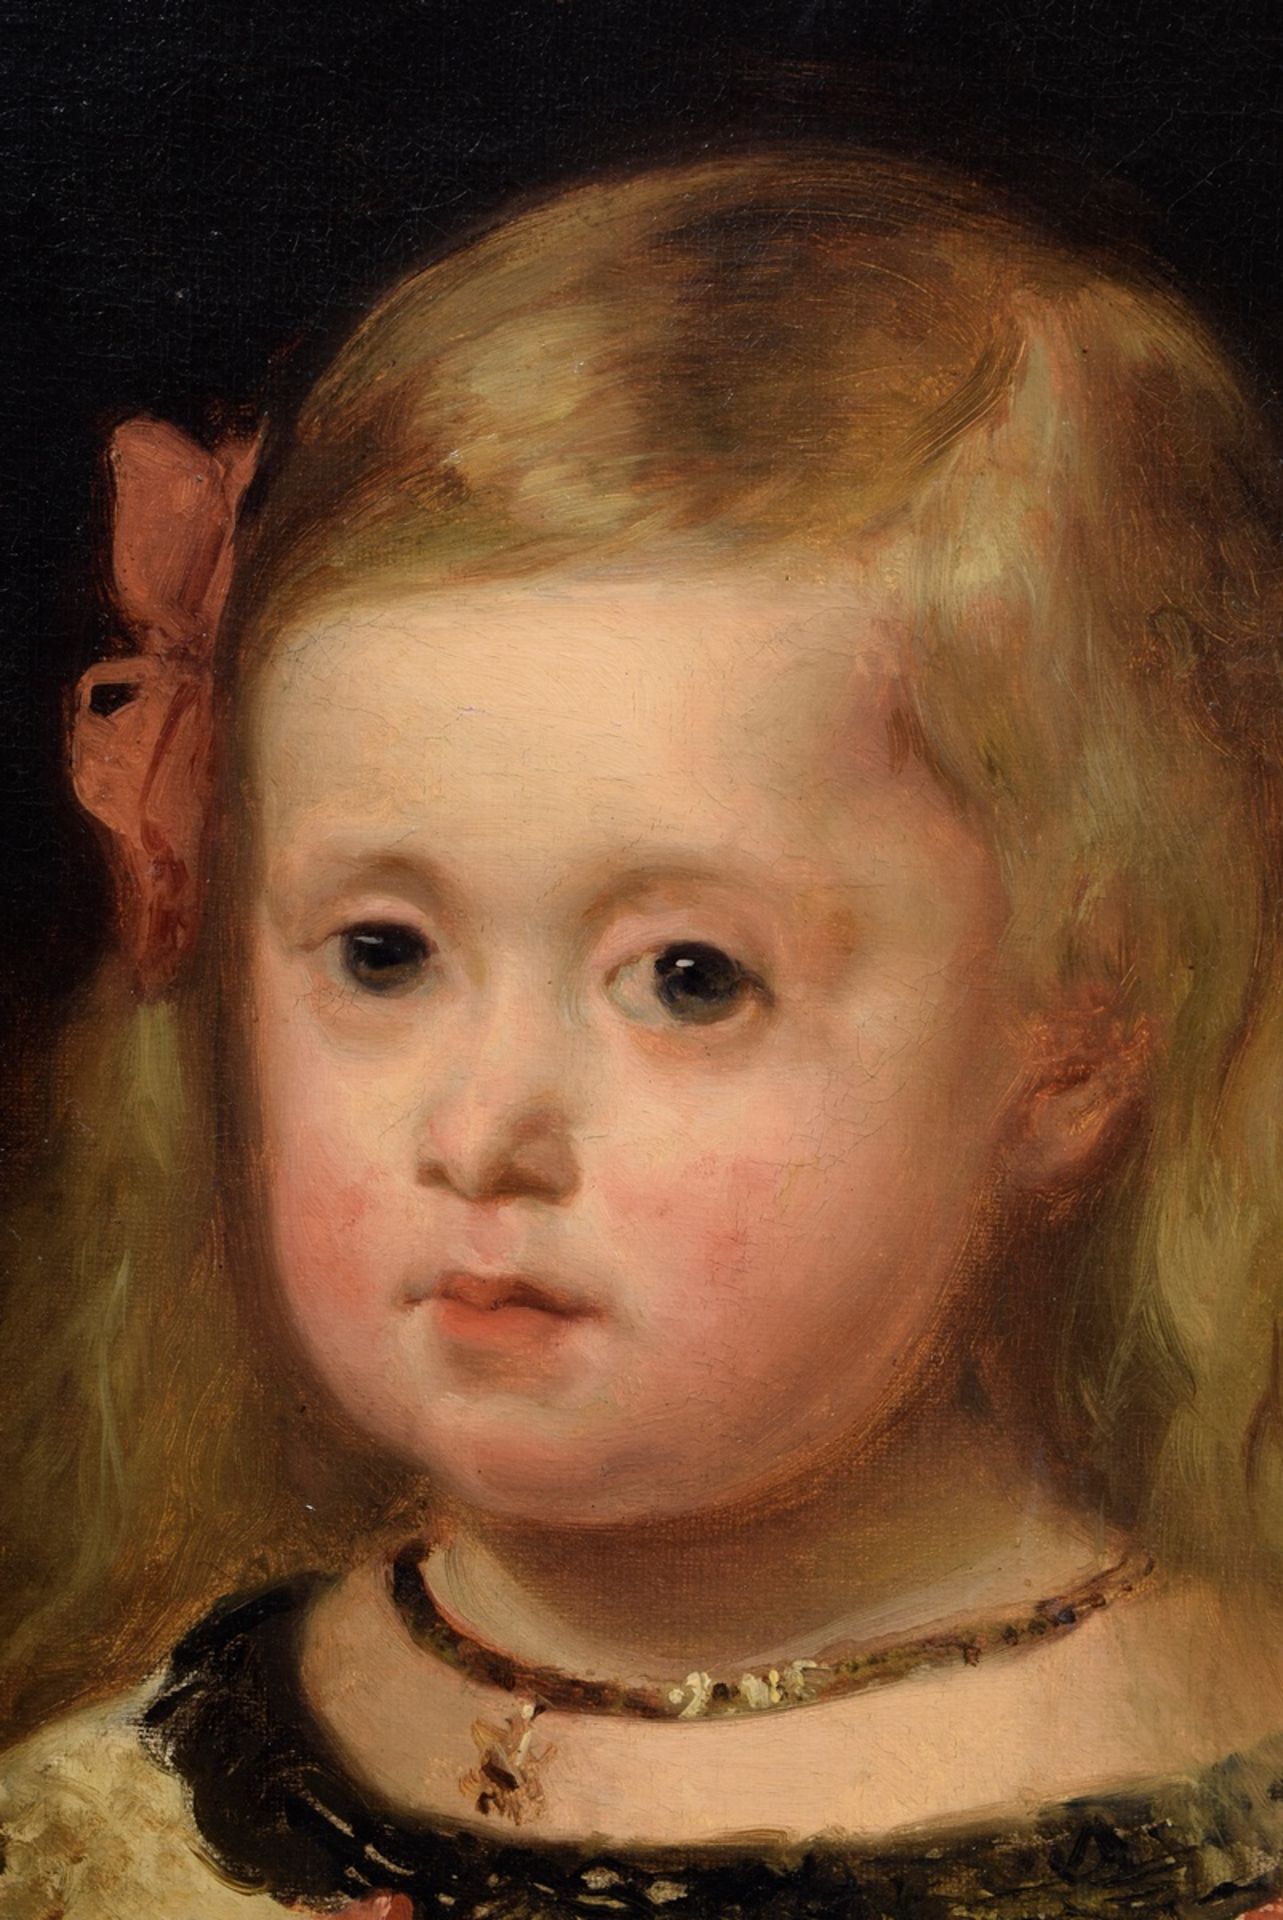 Unknown portraitist of the 18th/19th c. "Infanta Margarita Teresa (1651-1673)", daughter of Philip  - Image 2 of 6